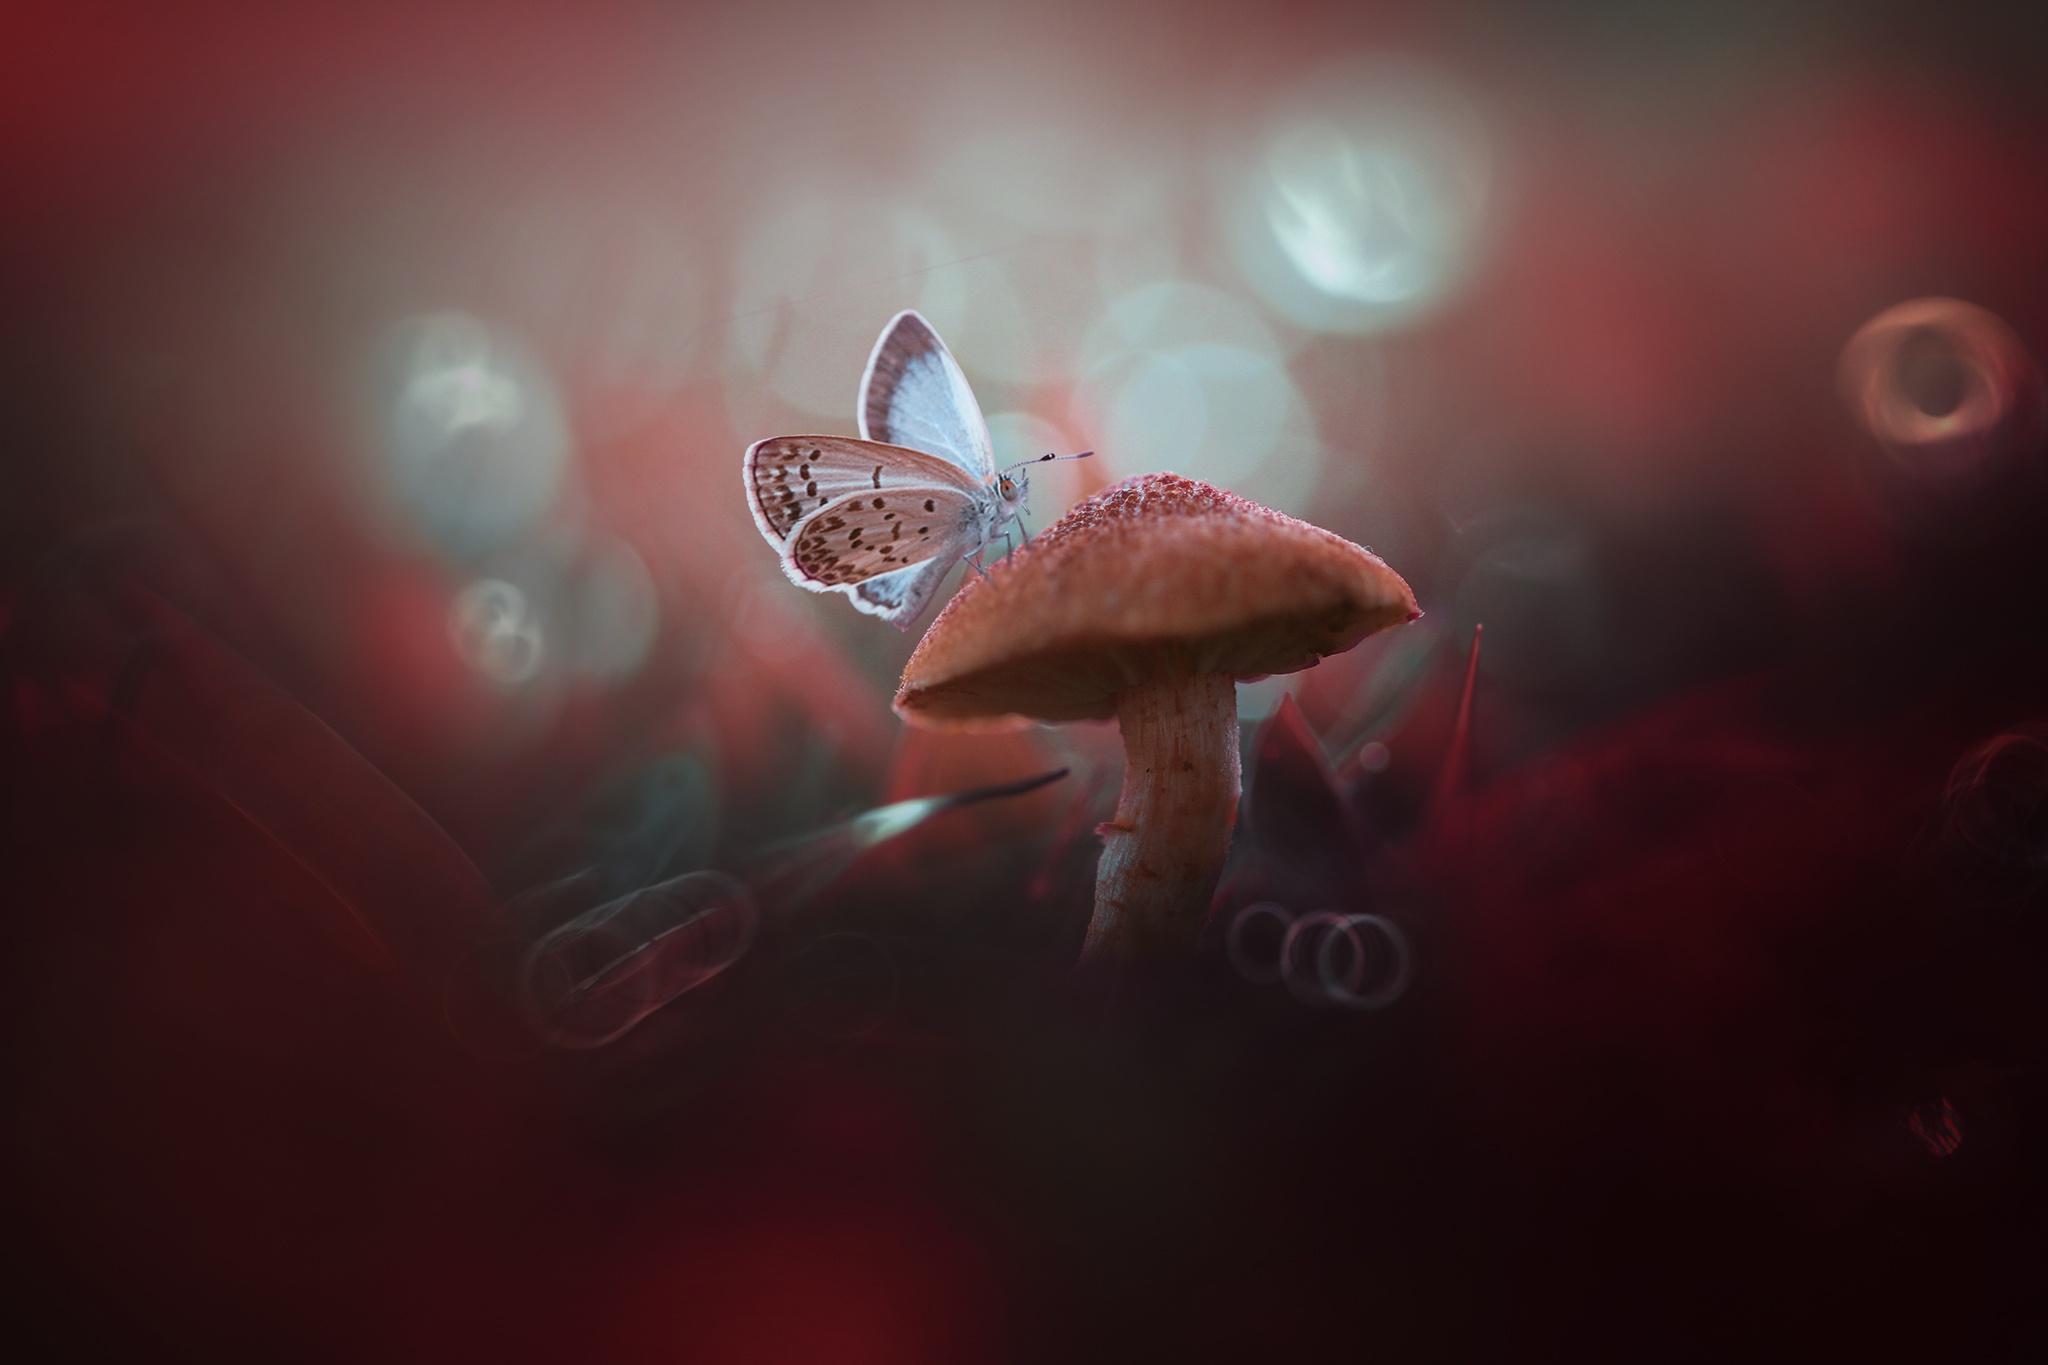 General 2048x1365 animals butterfly mushroom insect closeup digital art